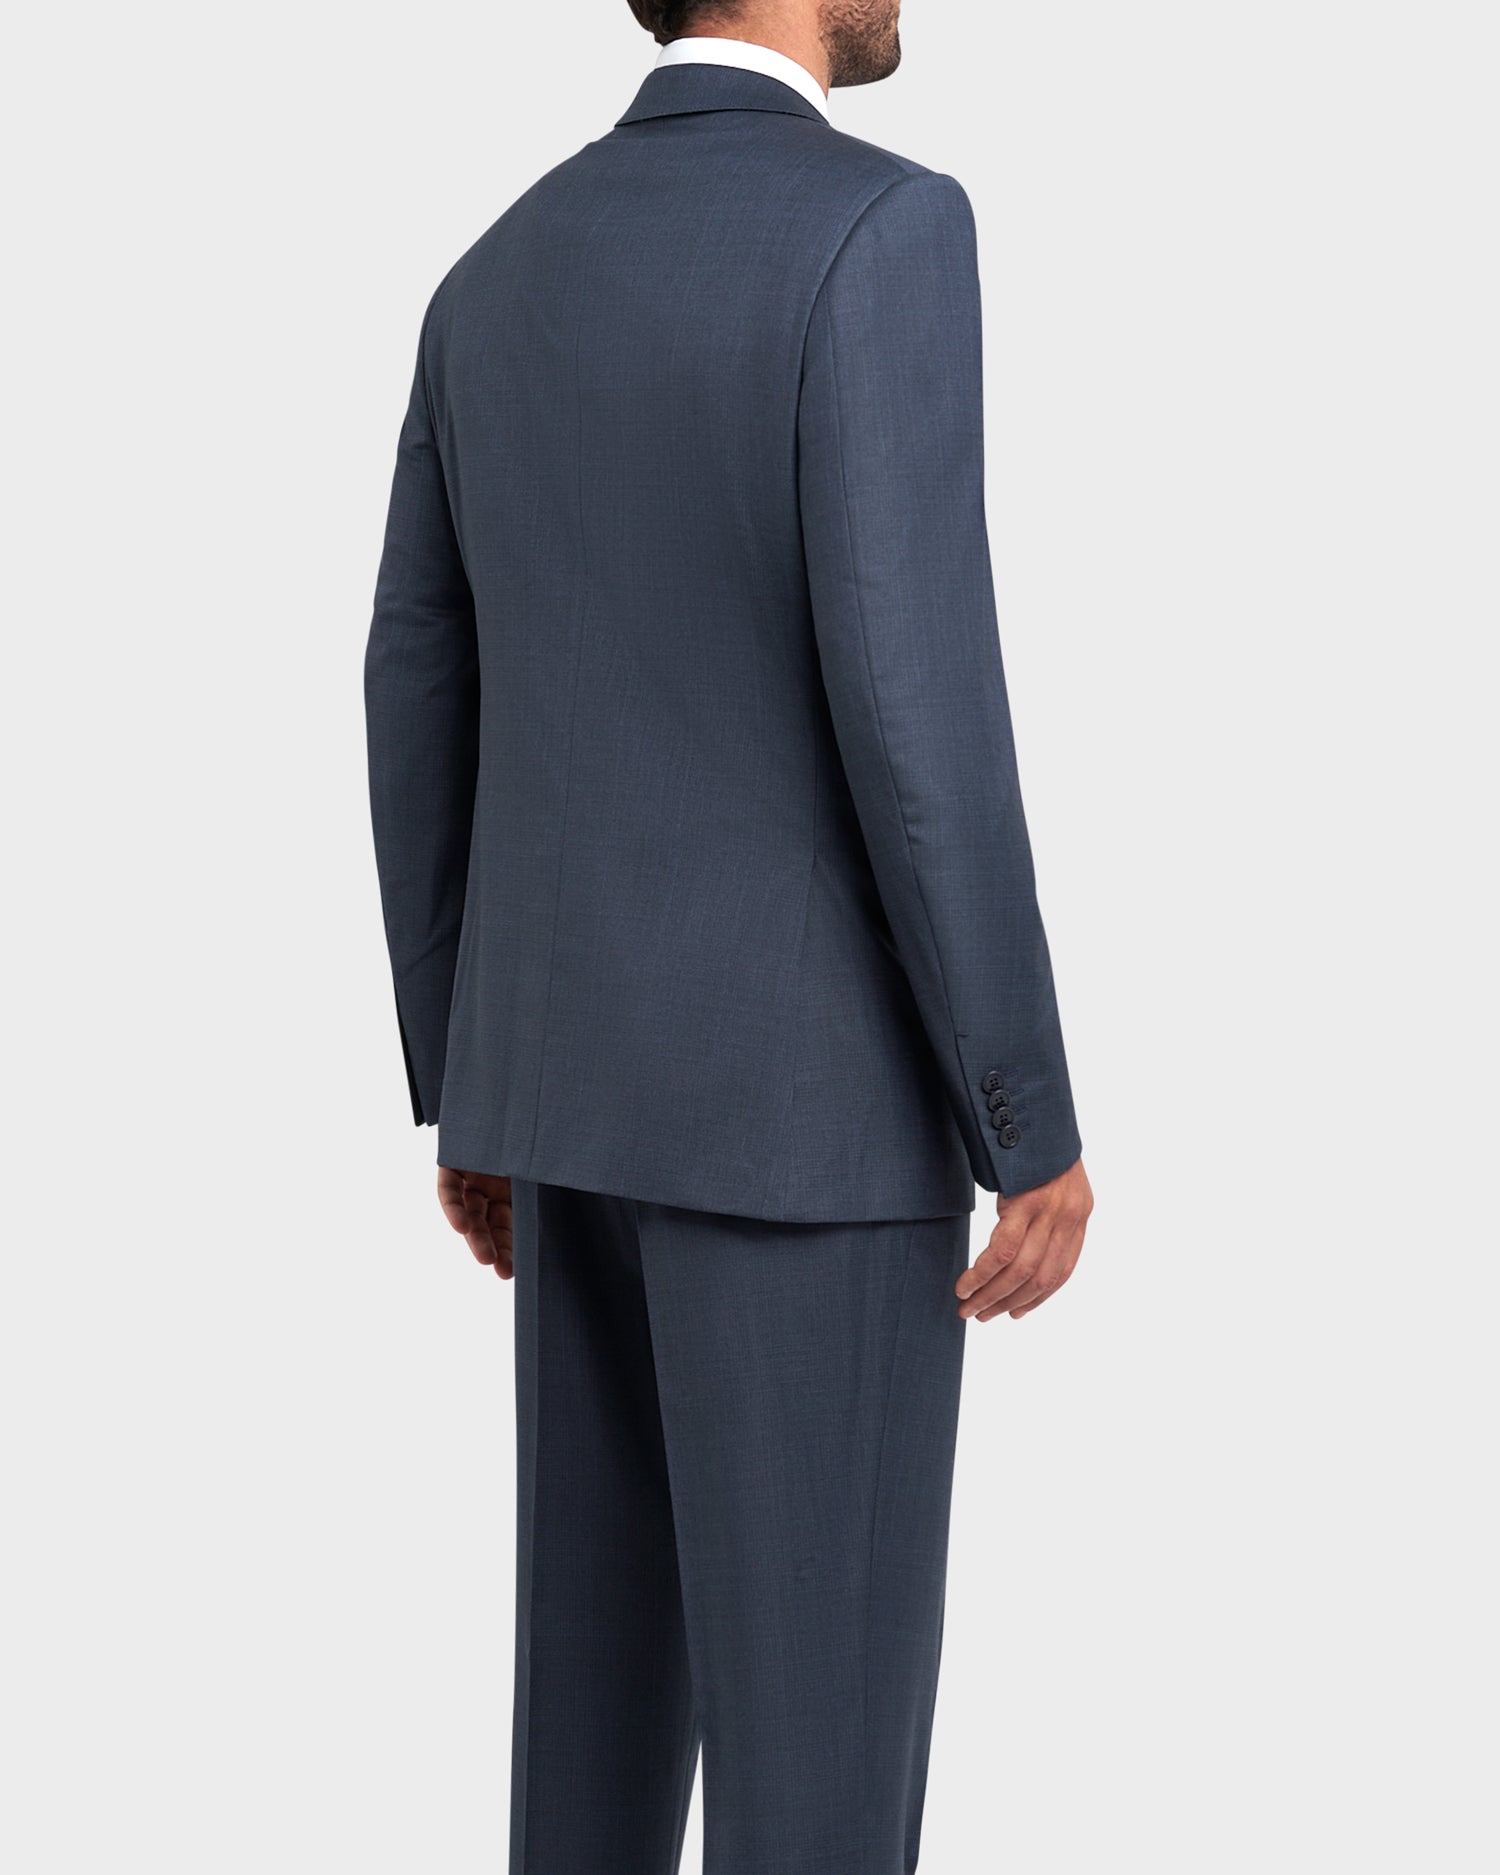 Blue Twill Multi Season Wool Suit